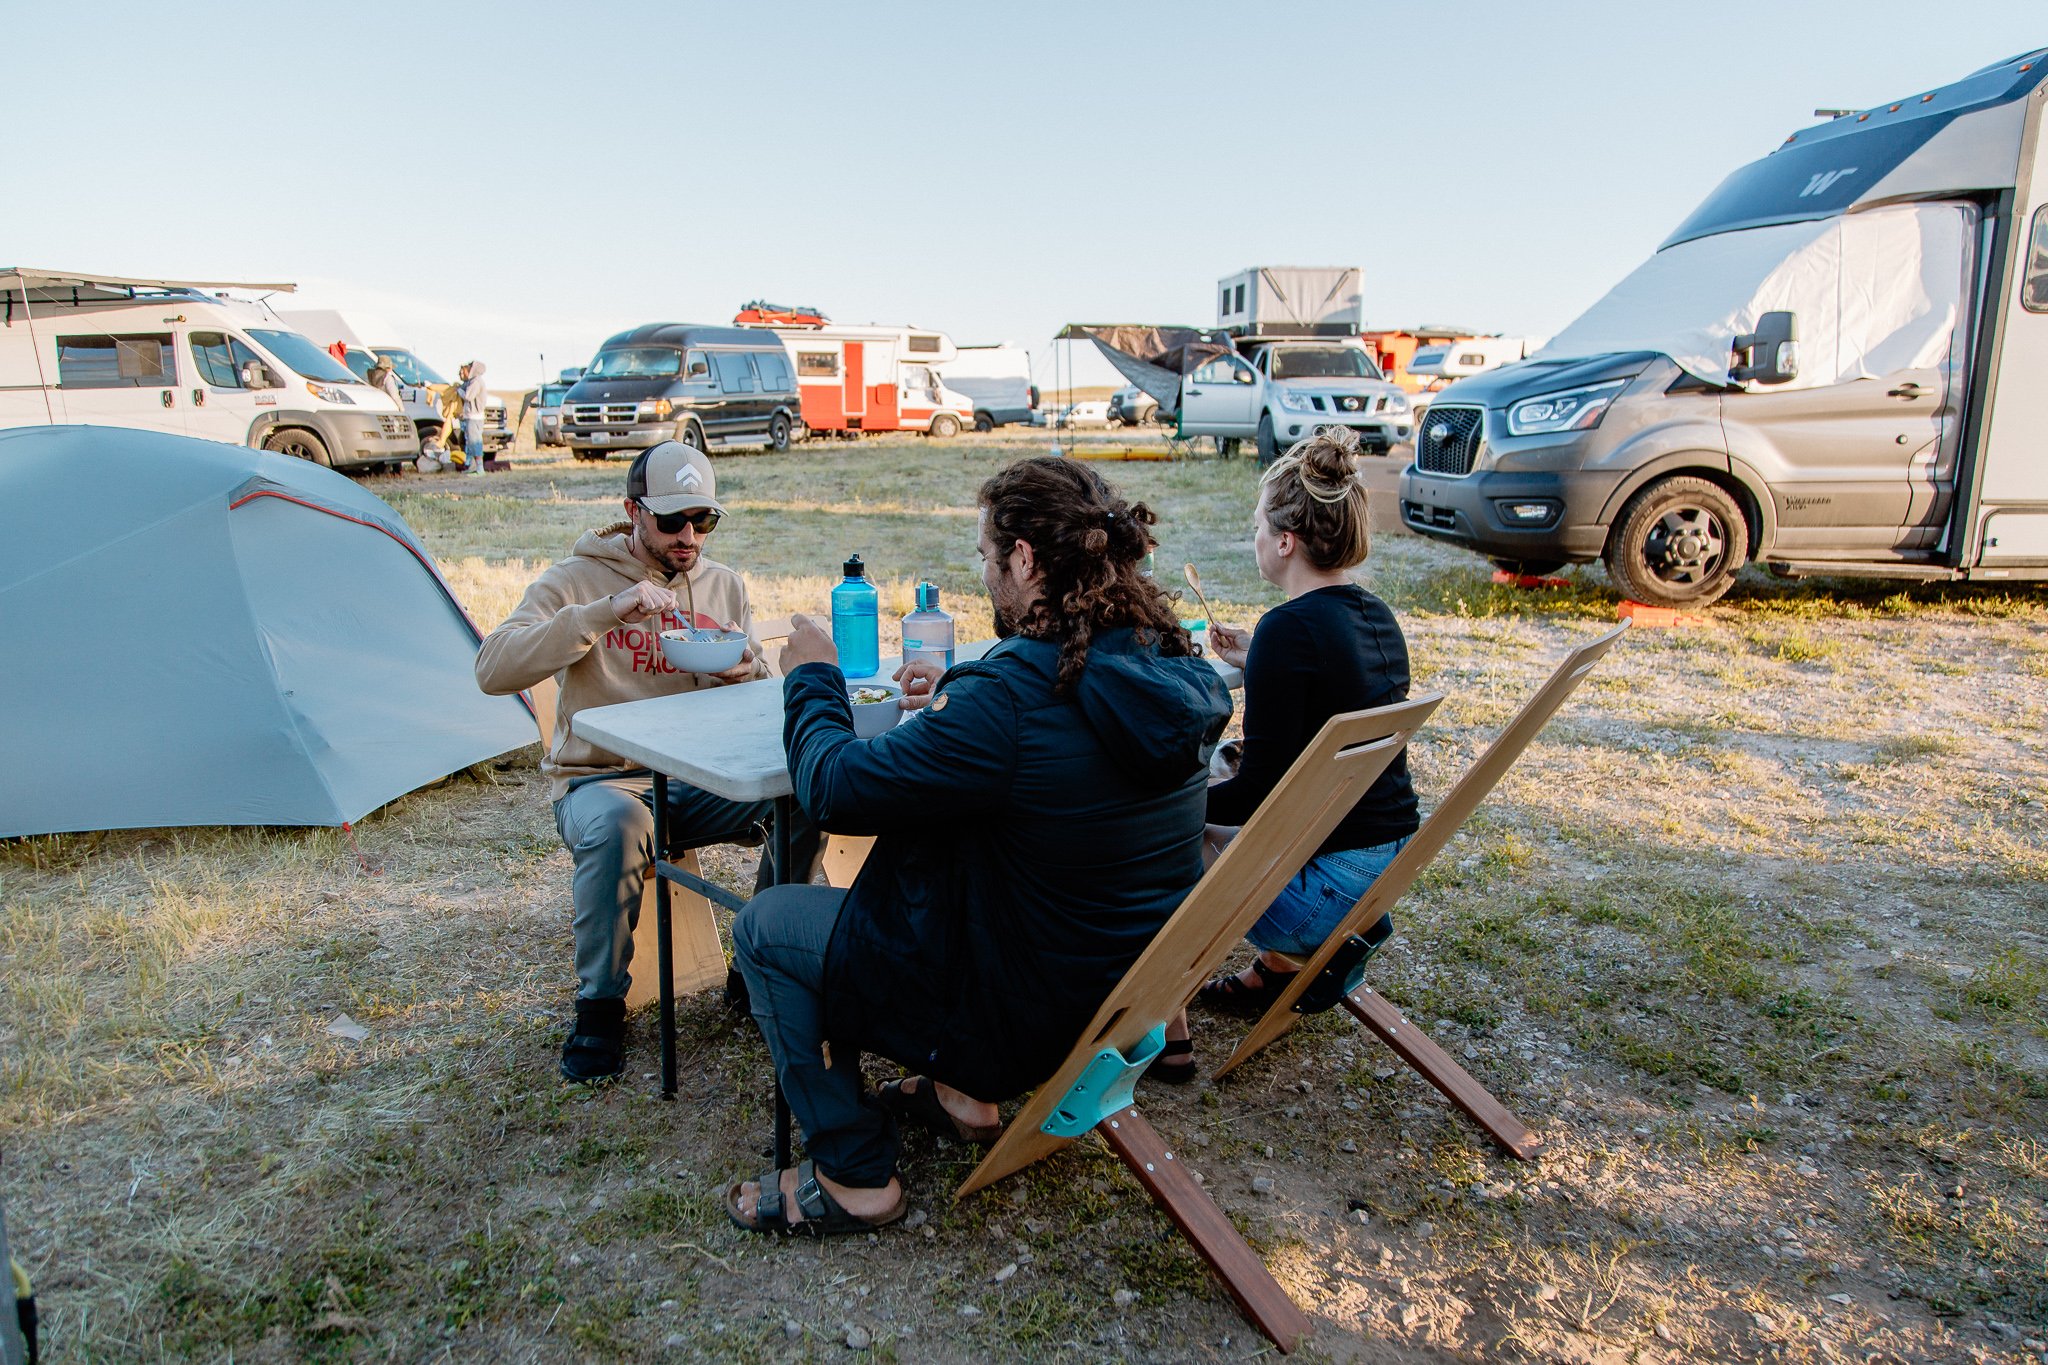 Wind River Rally - Vanlife & Overlanding Gathering in Wyoming